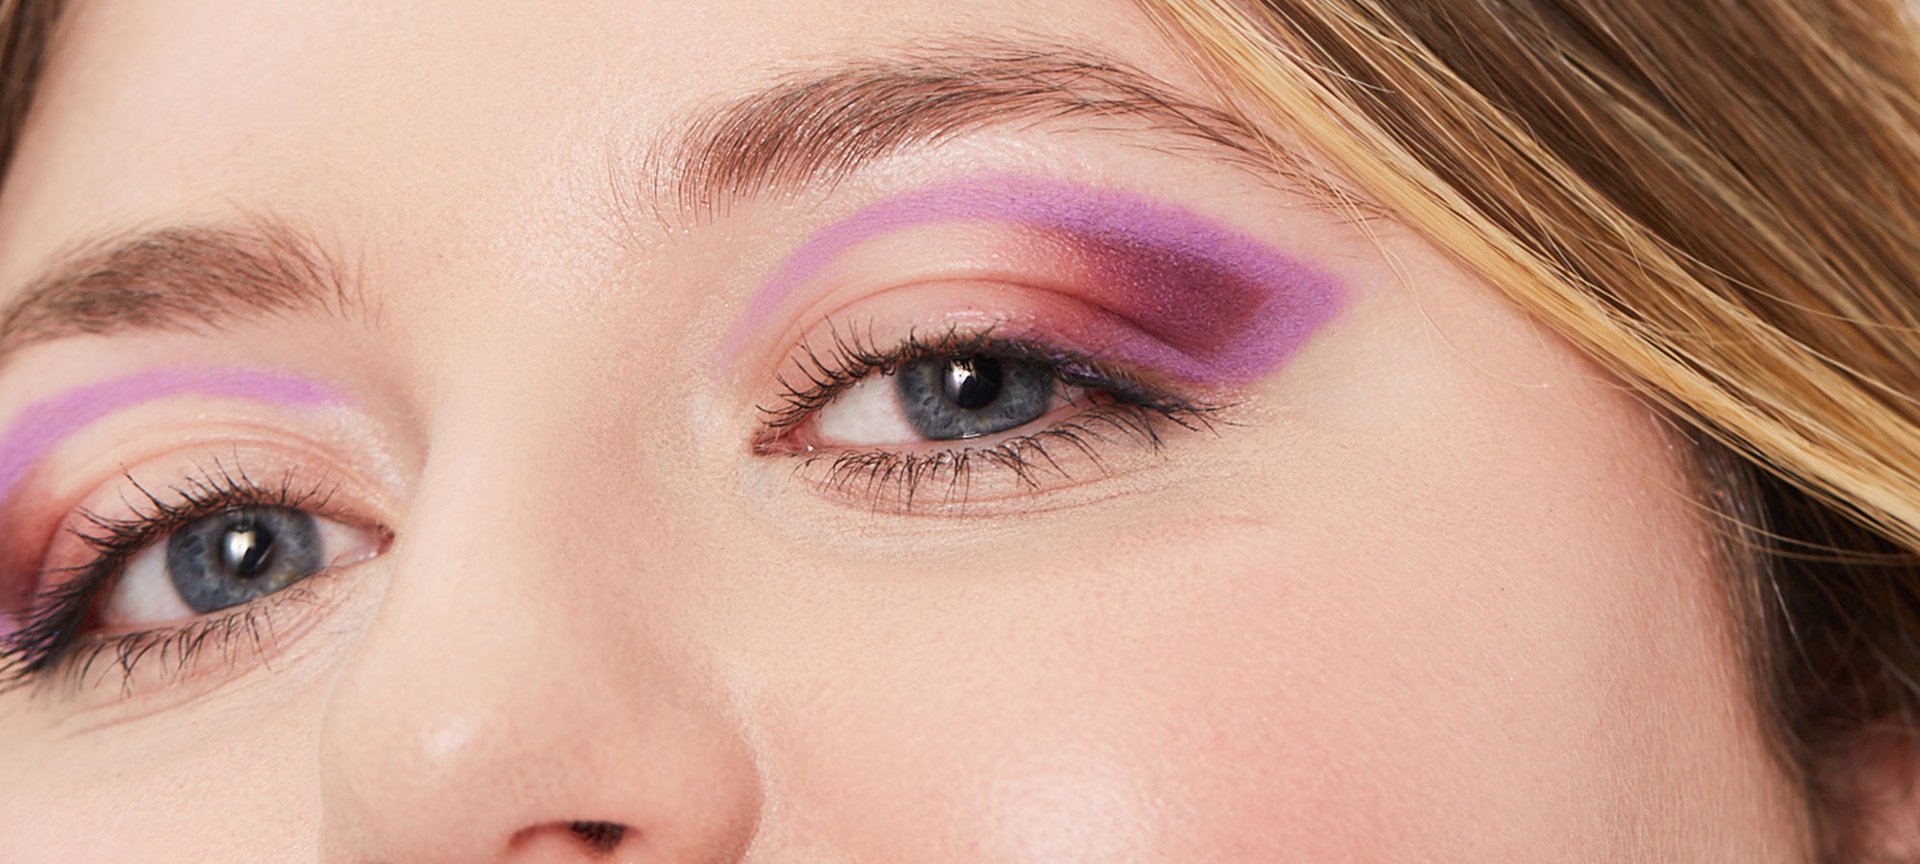 The Best Eyeshadow Colors To Make Blue Eyes Pop - L’Oréal Paris